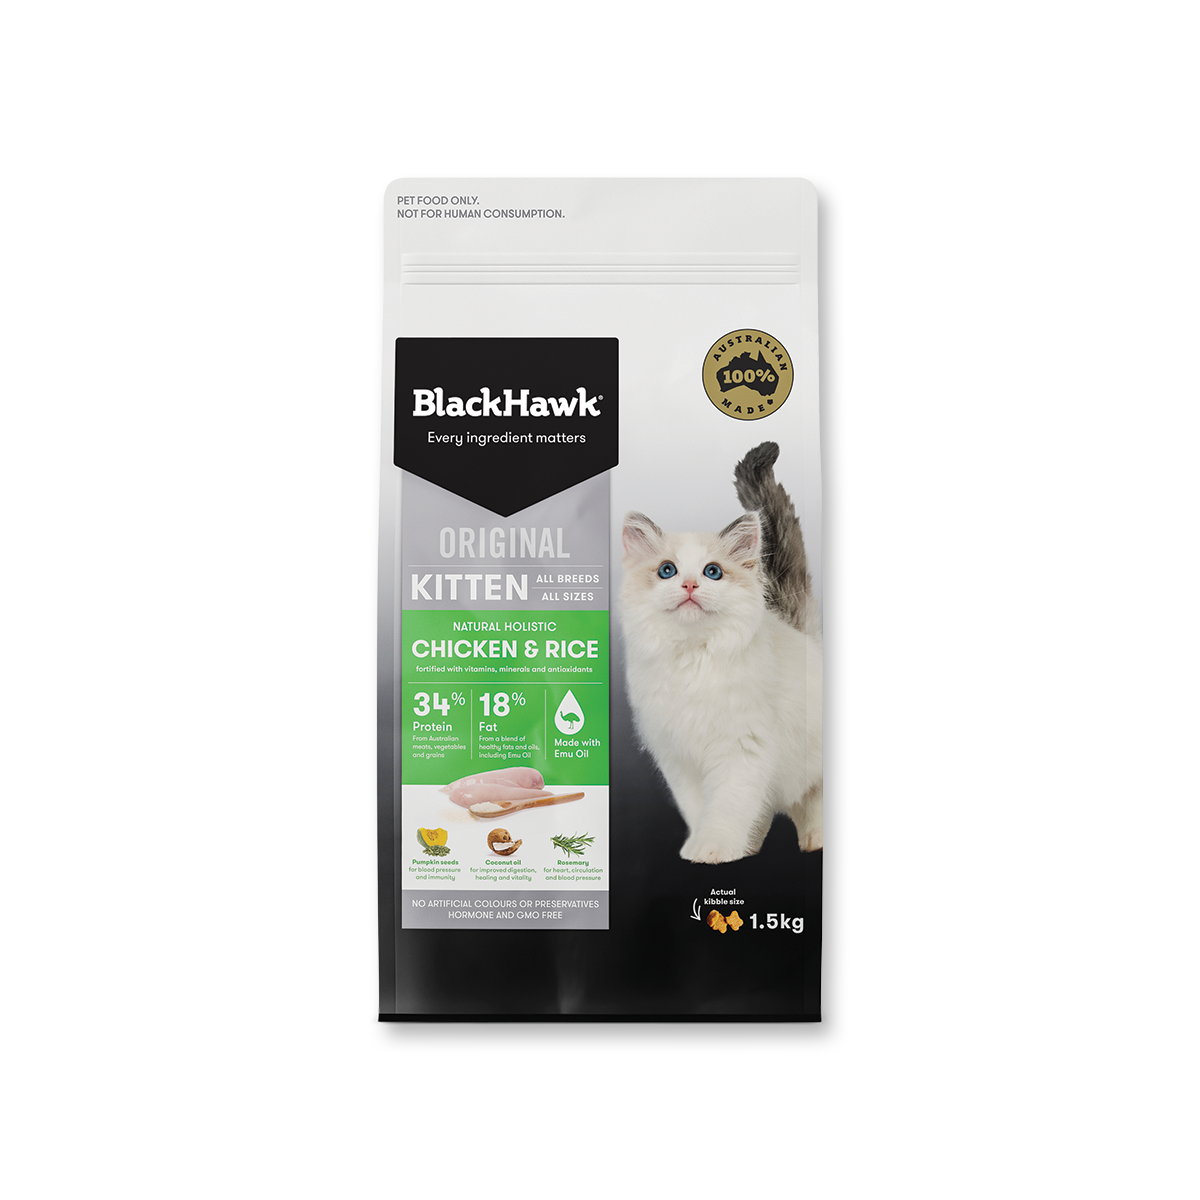 BlackHawk Original แบล็กฮอว์ก อาหารลูกแมวสูตรเนื้อไก่และข้าว ขนาด 1.5 กิโลกรัม